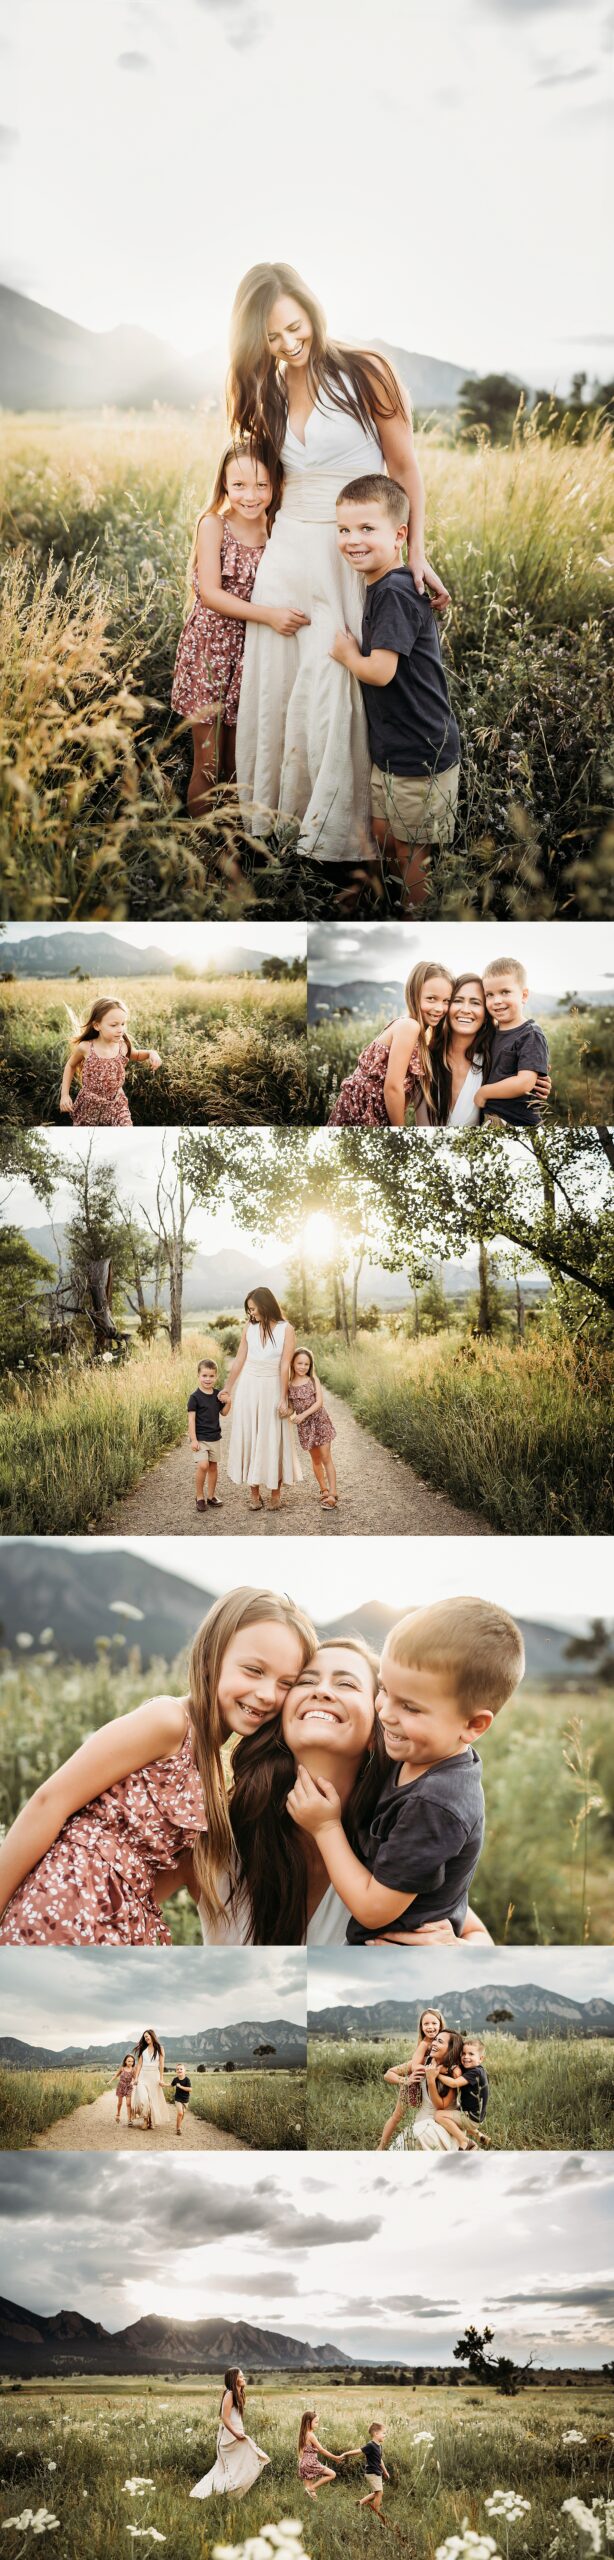 denver family photographer, lifestyle outdoor sunset